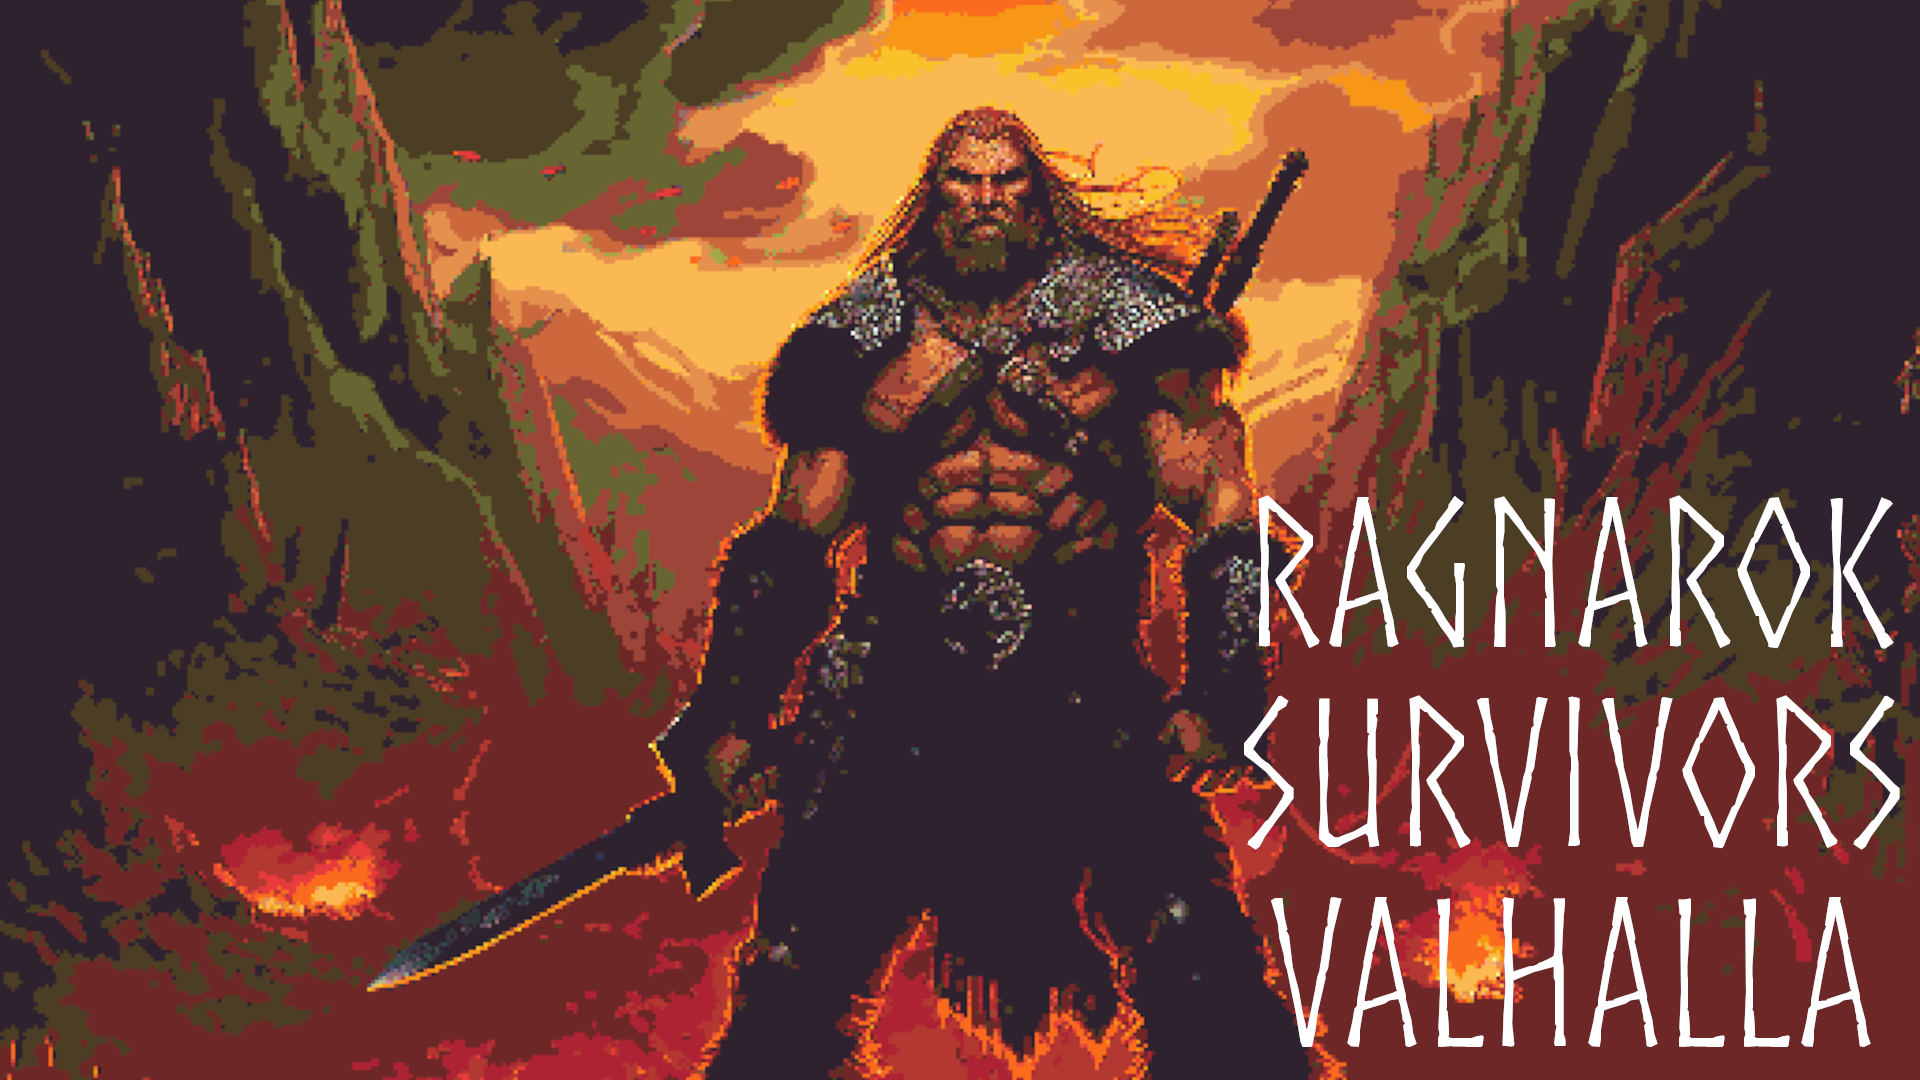 Ragnarok Survivors: Valhalla launches via early access in October